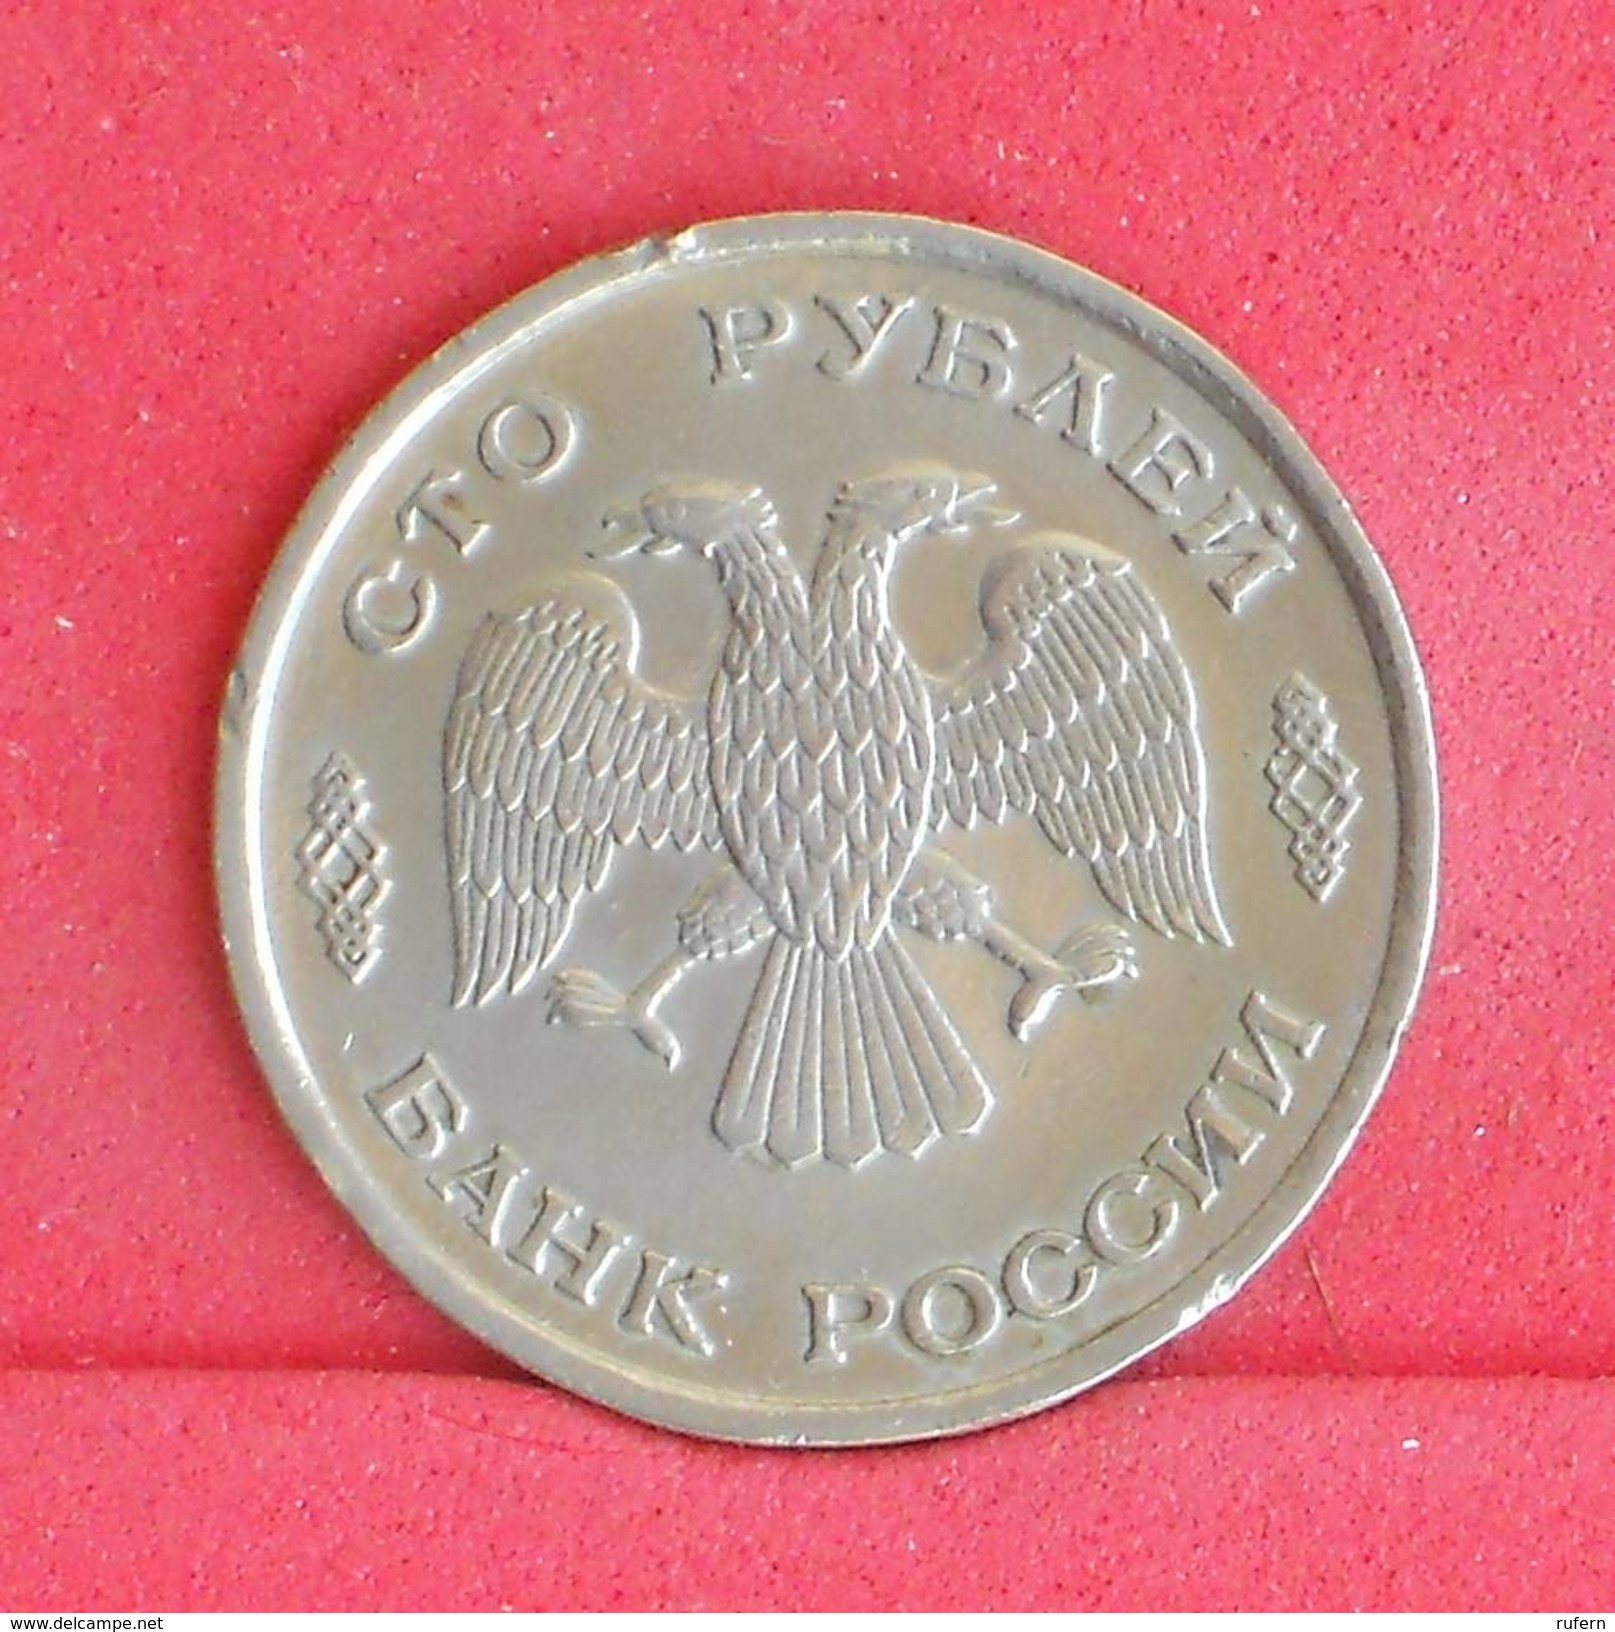 RUSSIA 100 ROUBLE 1993 -    KM# 338 - (Nº18097) - Russia